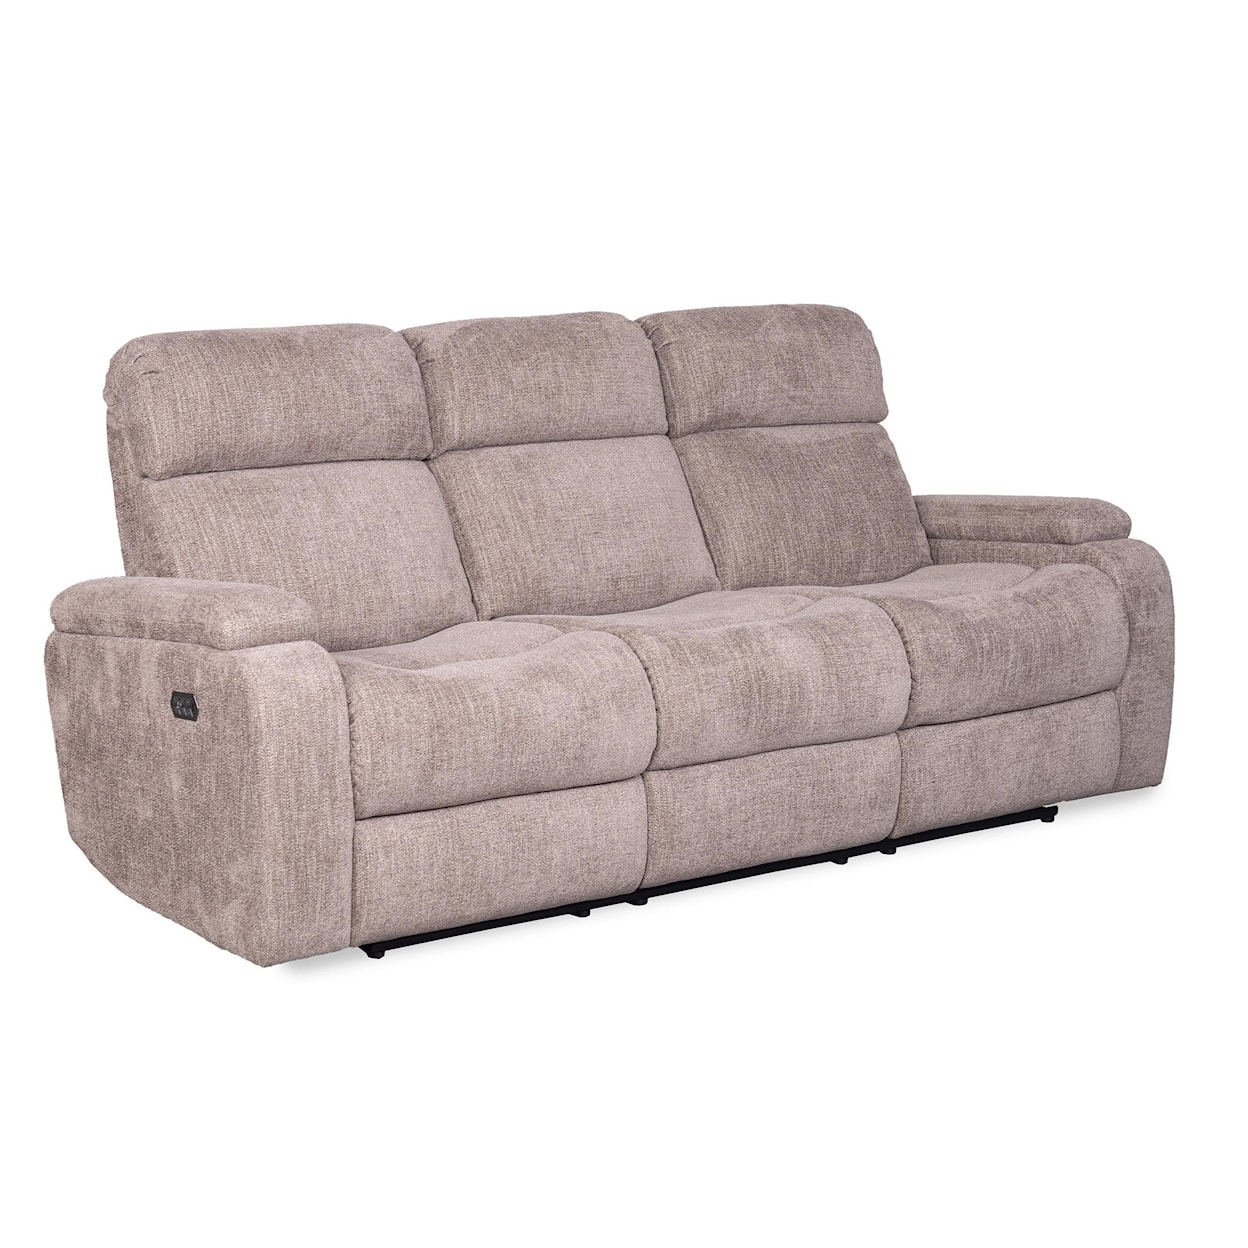 Sarah Randolph Designs 5025 Reclining Sofa